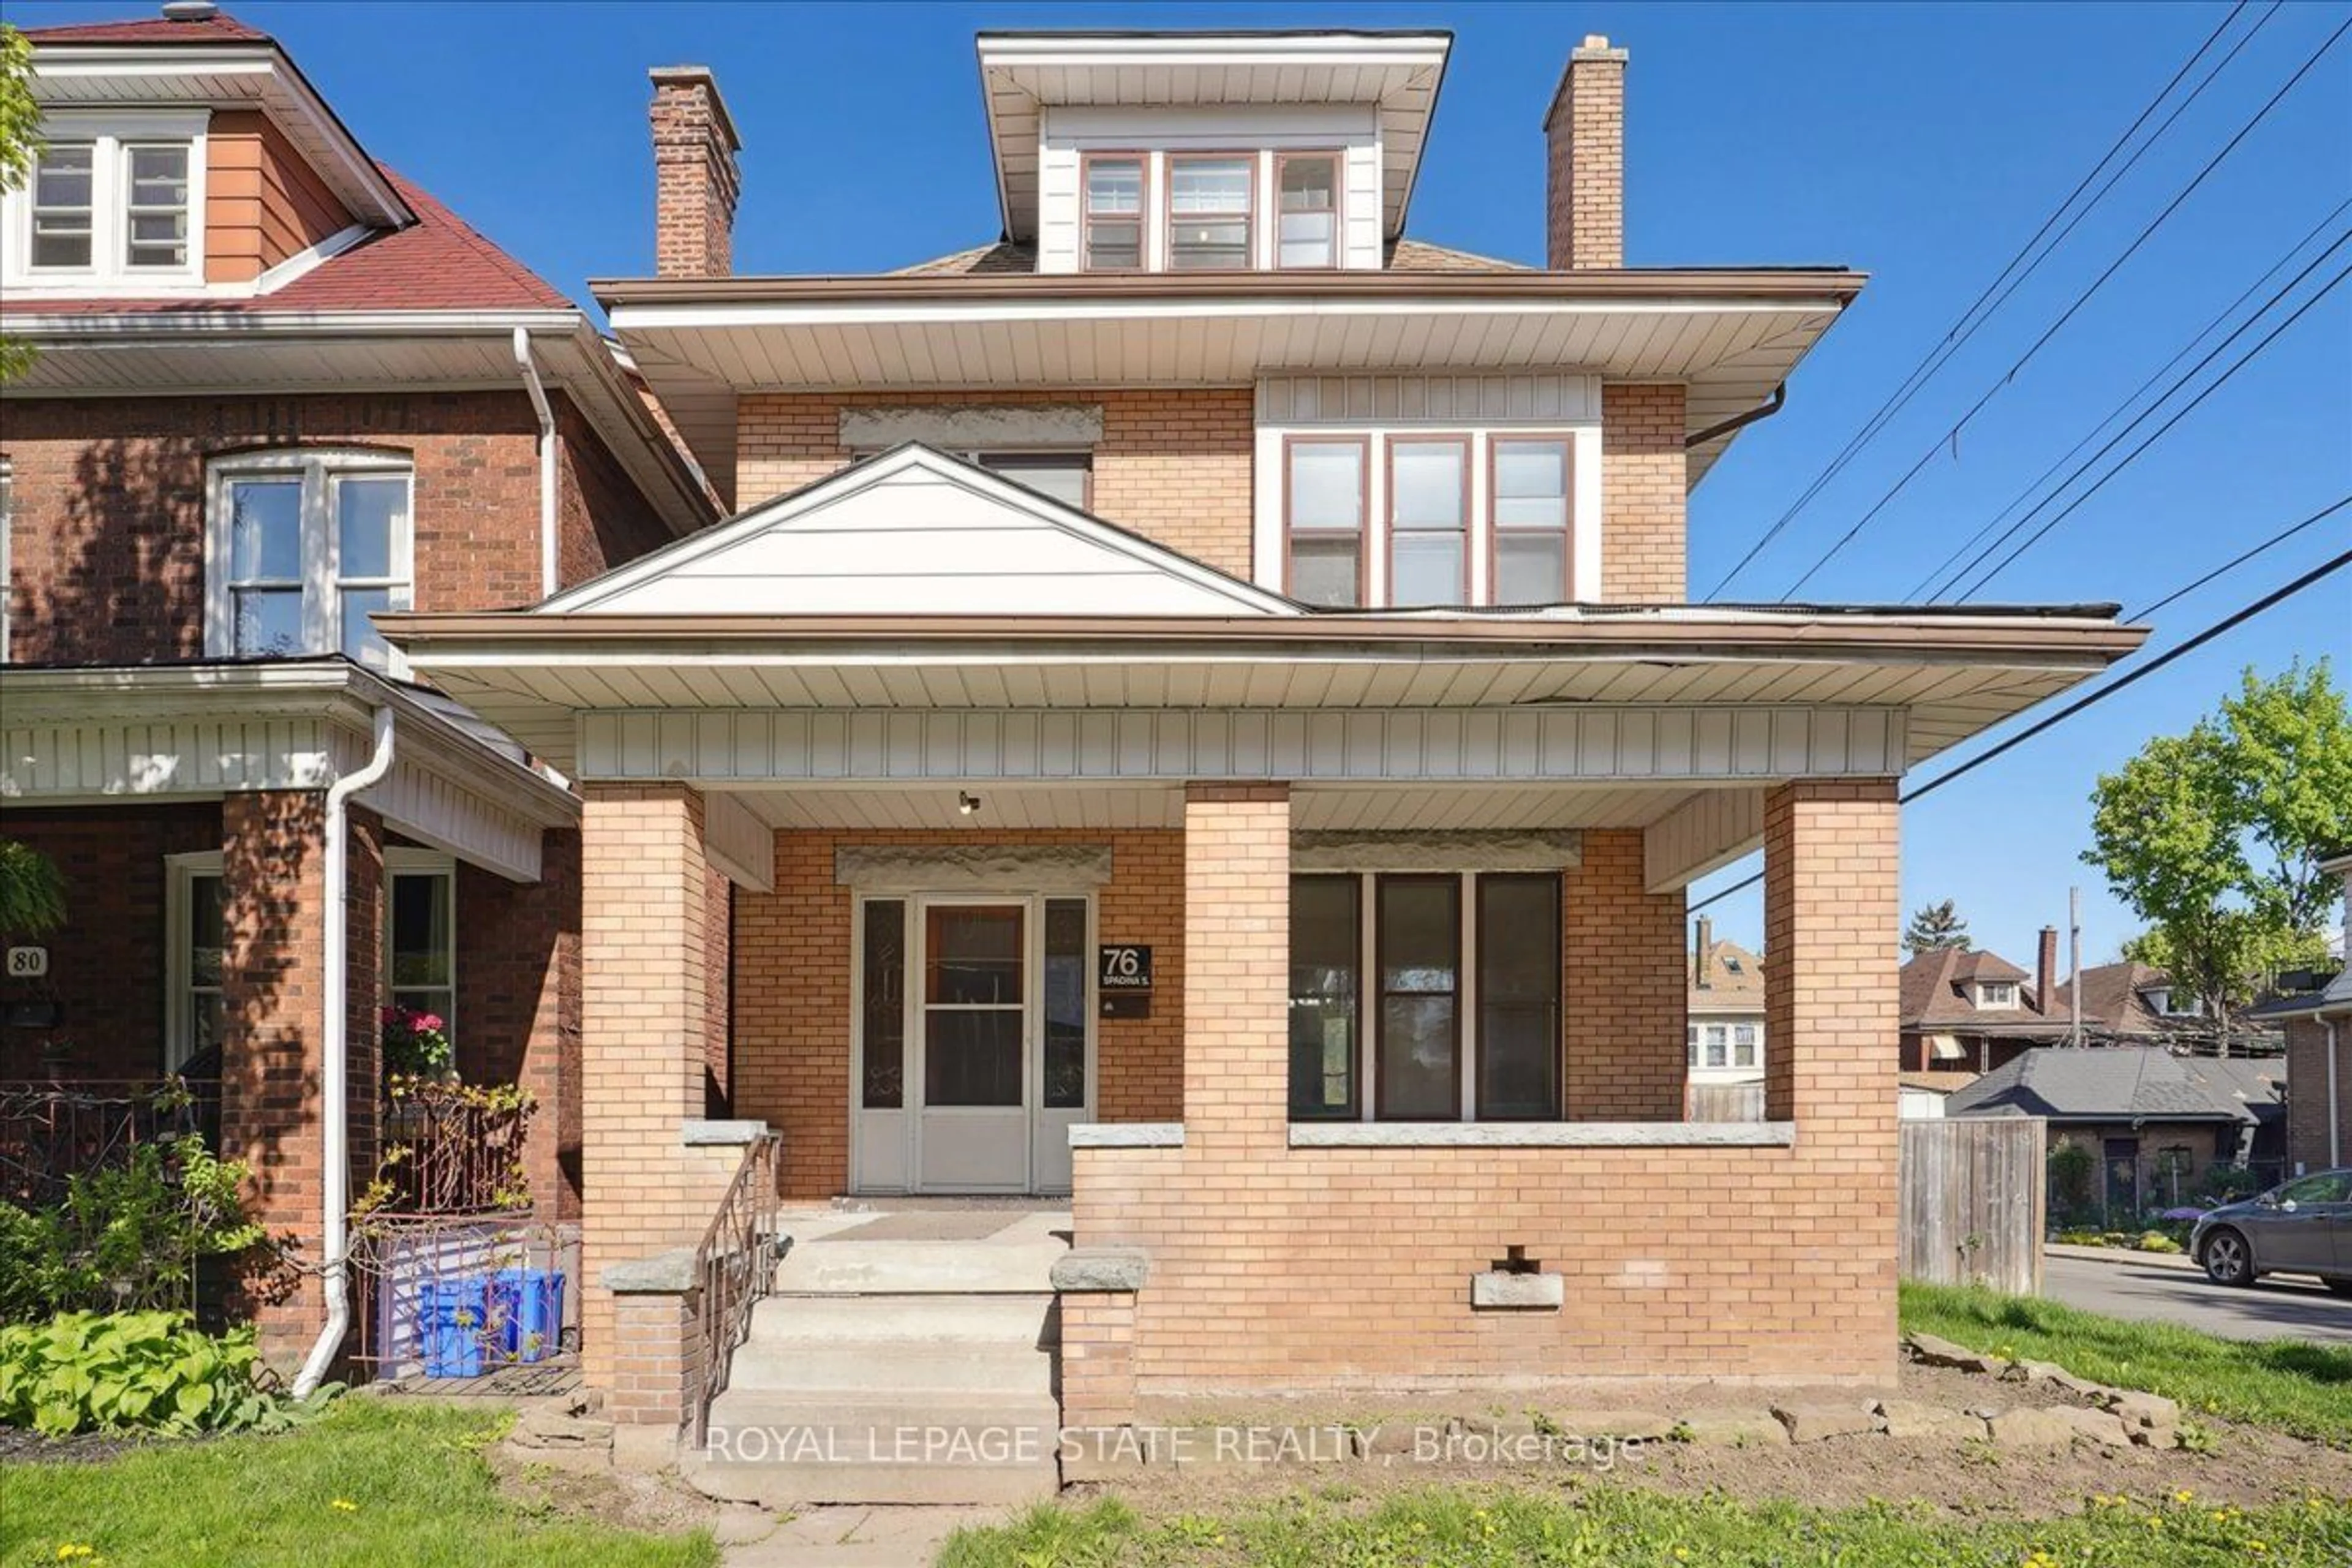 Home with brick exterior material for 76 Spadina Ave, Hamilton Ontario L8M 2X3